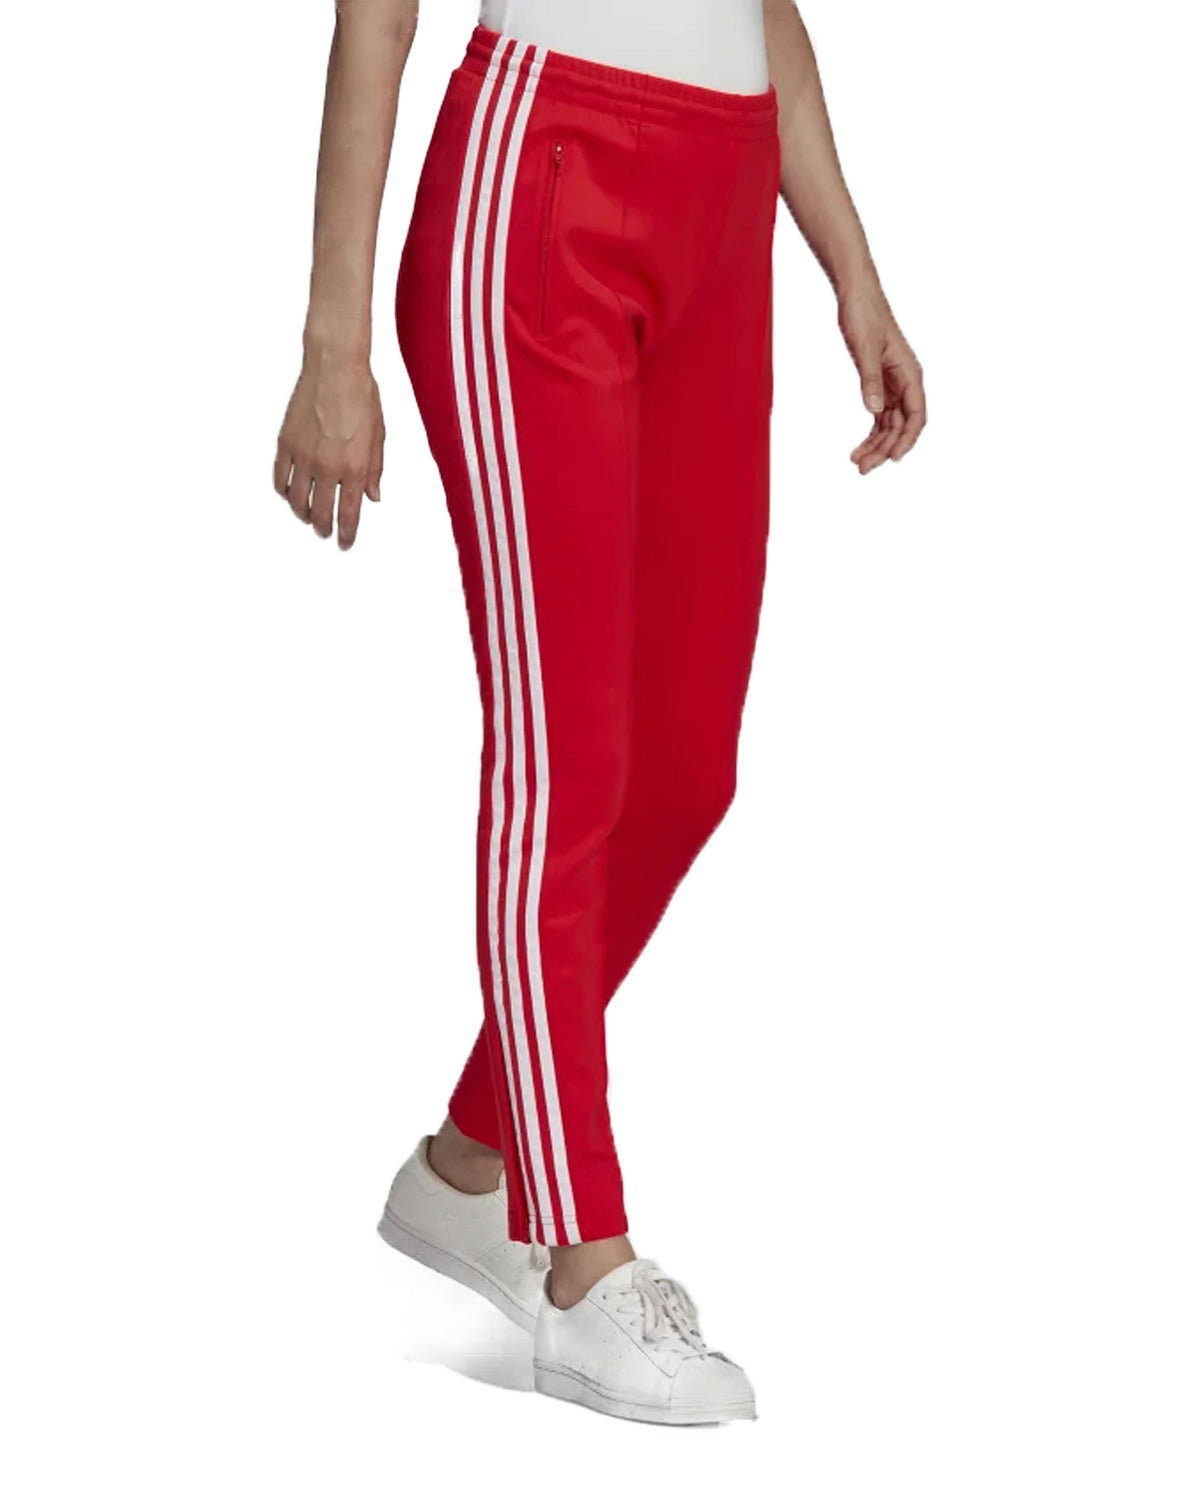 Pantalone Donna Adidas Superstar Rosso